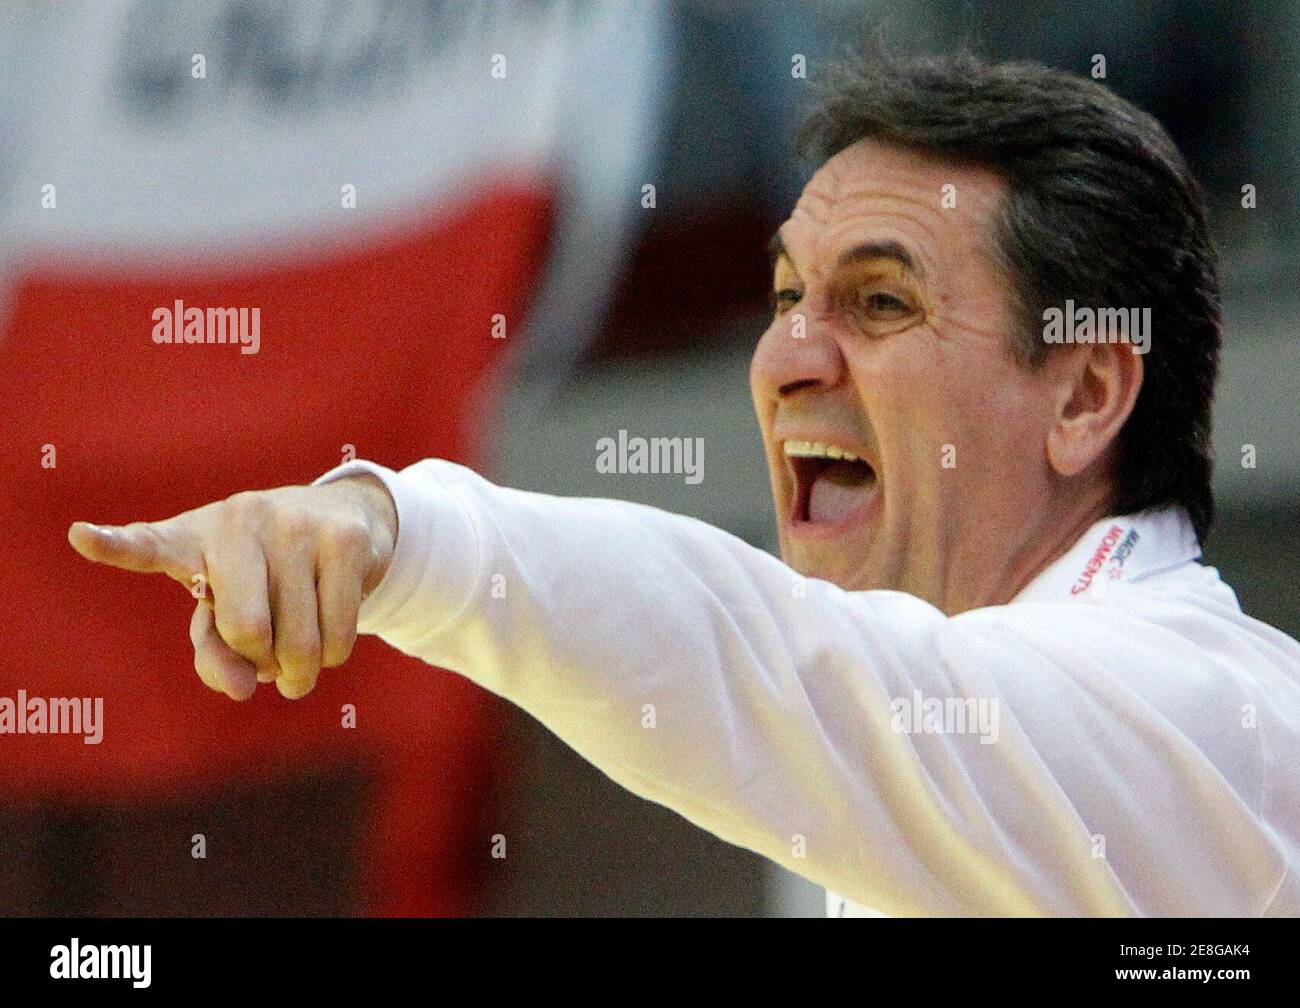 Spain's coach Valero Rivera Lopez reacts during their Men's European Handball Championship second round match against Poland in Innsbruck, January 24, 2010.           REUTERS/Oleg Popov   (AUSTRIA - Tags: SPORT HANDBALL) Stock Photo